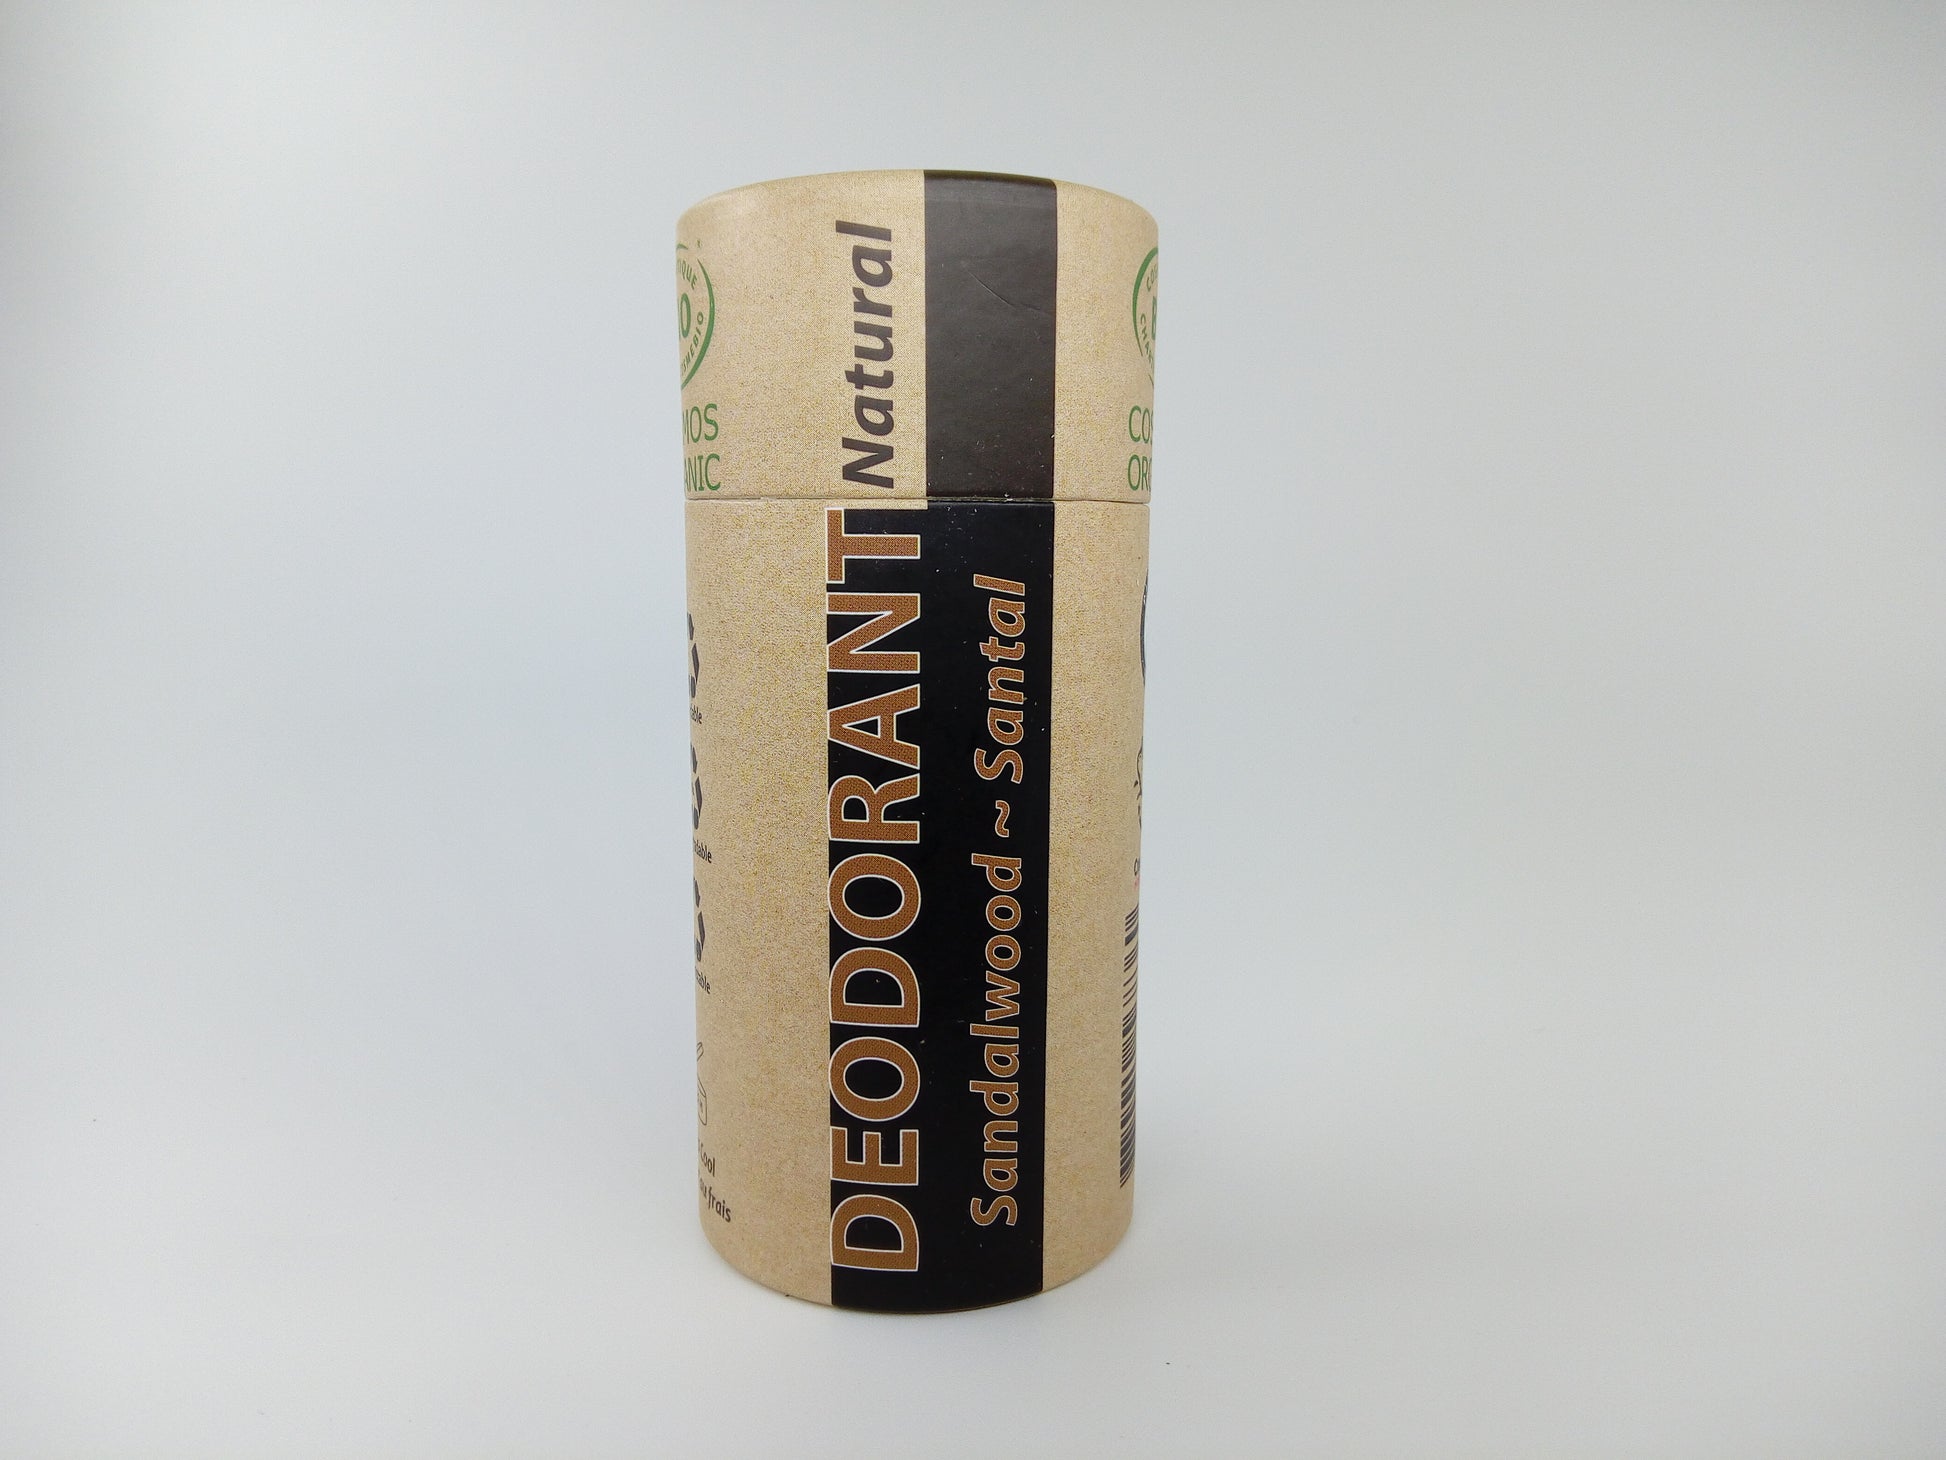 Organic Certified Natural Deodorant - Sandalwood 100ml - Earthsenseorganics